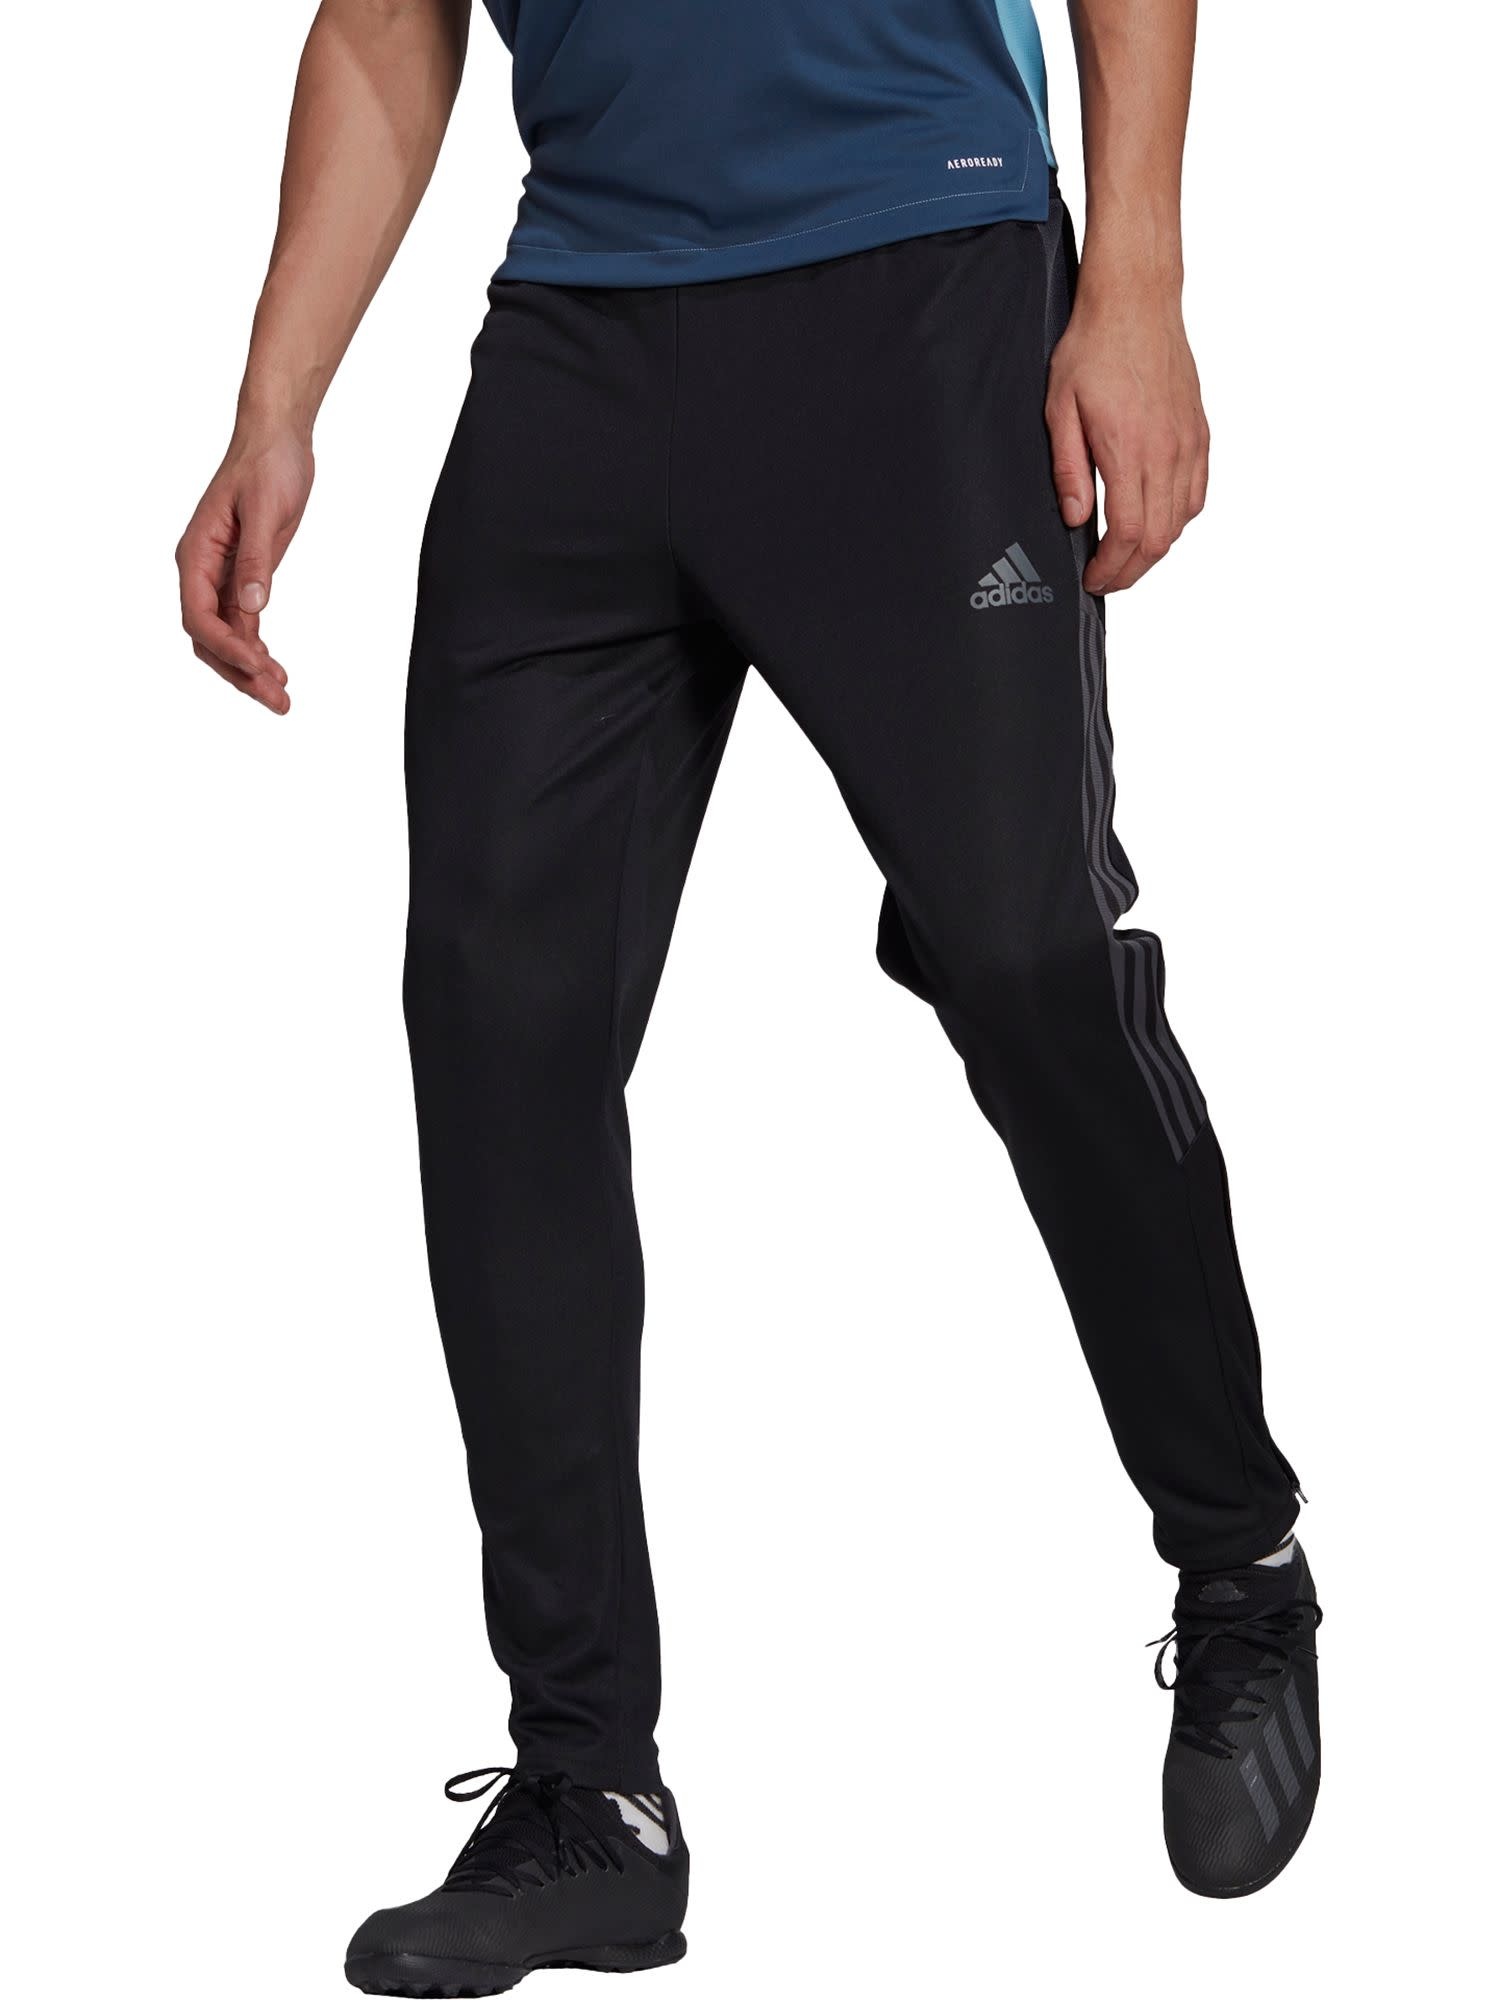 Persona Todo el mundo mamífero adidas adidas Tiro 21 Performance Training Pants - Black/Grey - Soccerium